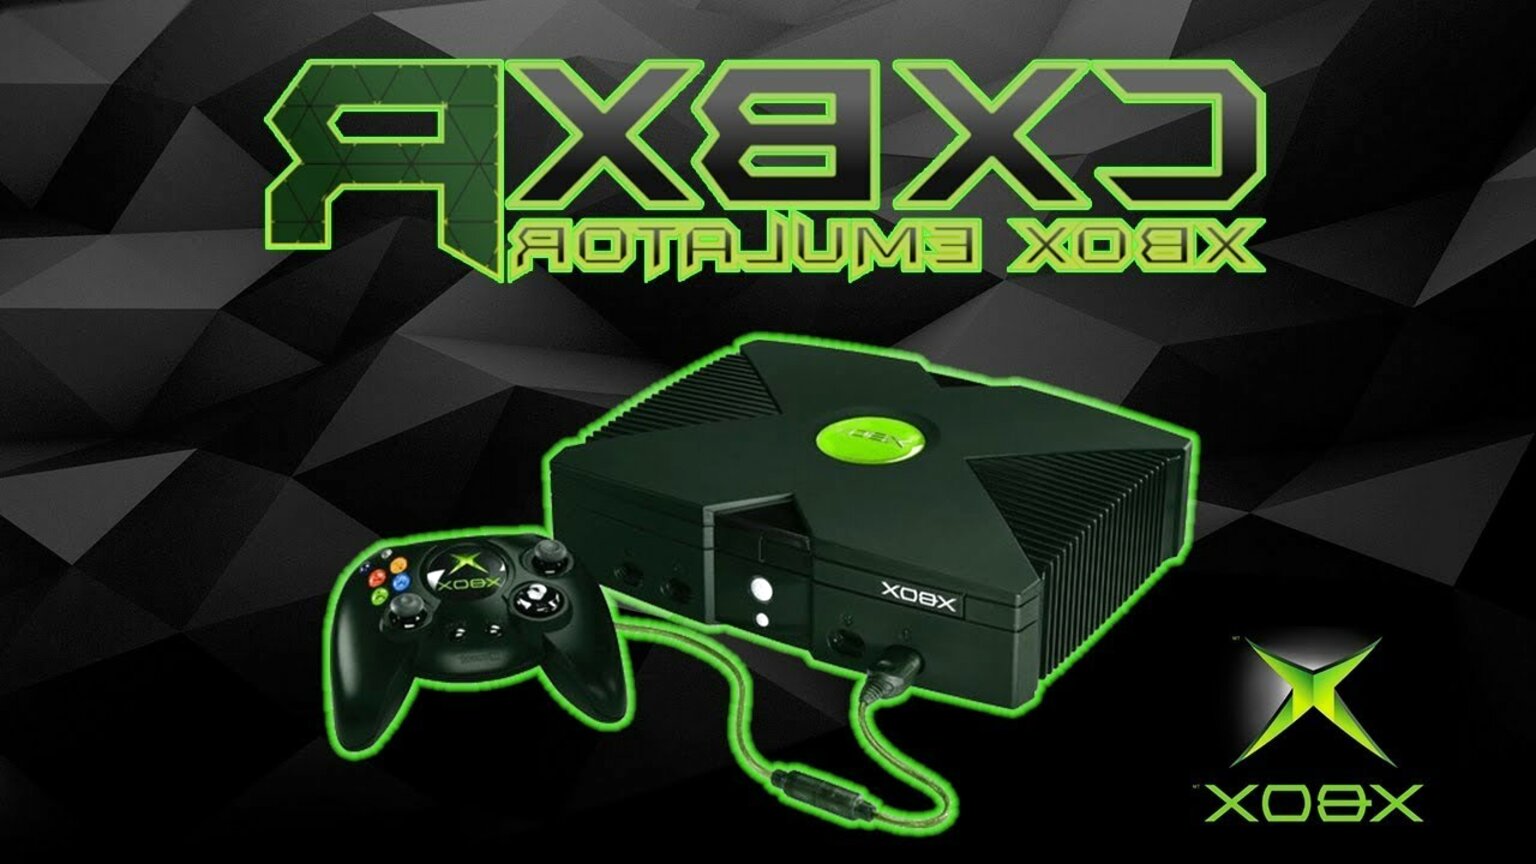 xbox emulator games